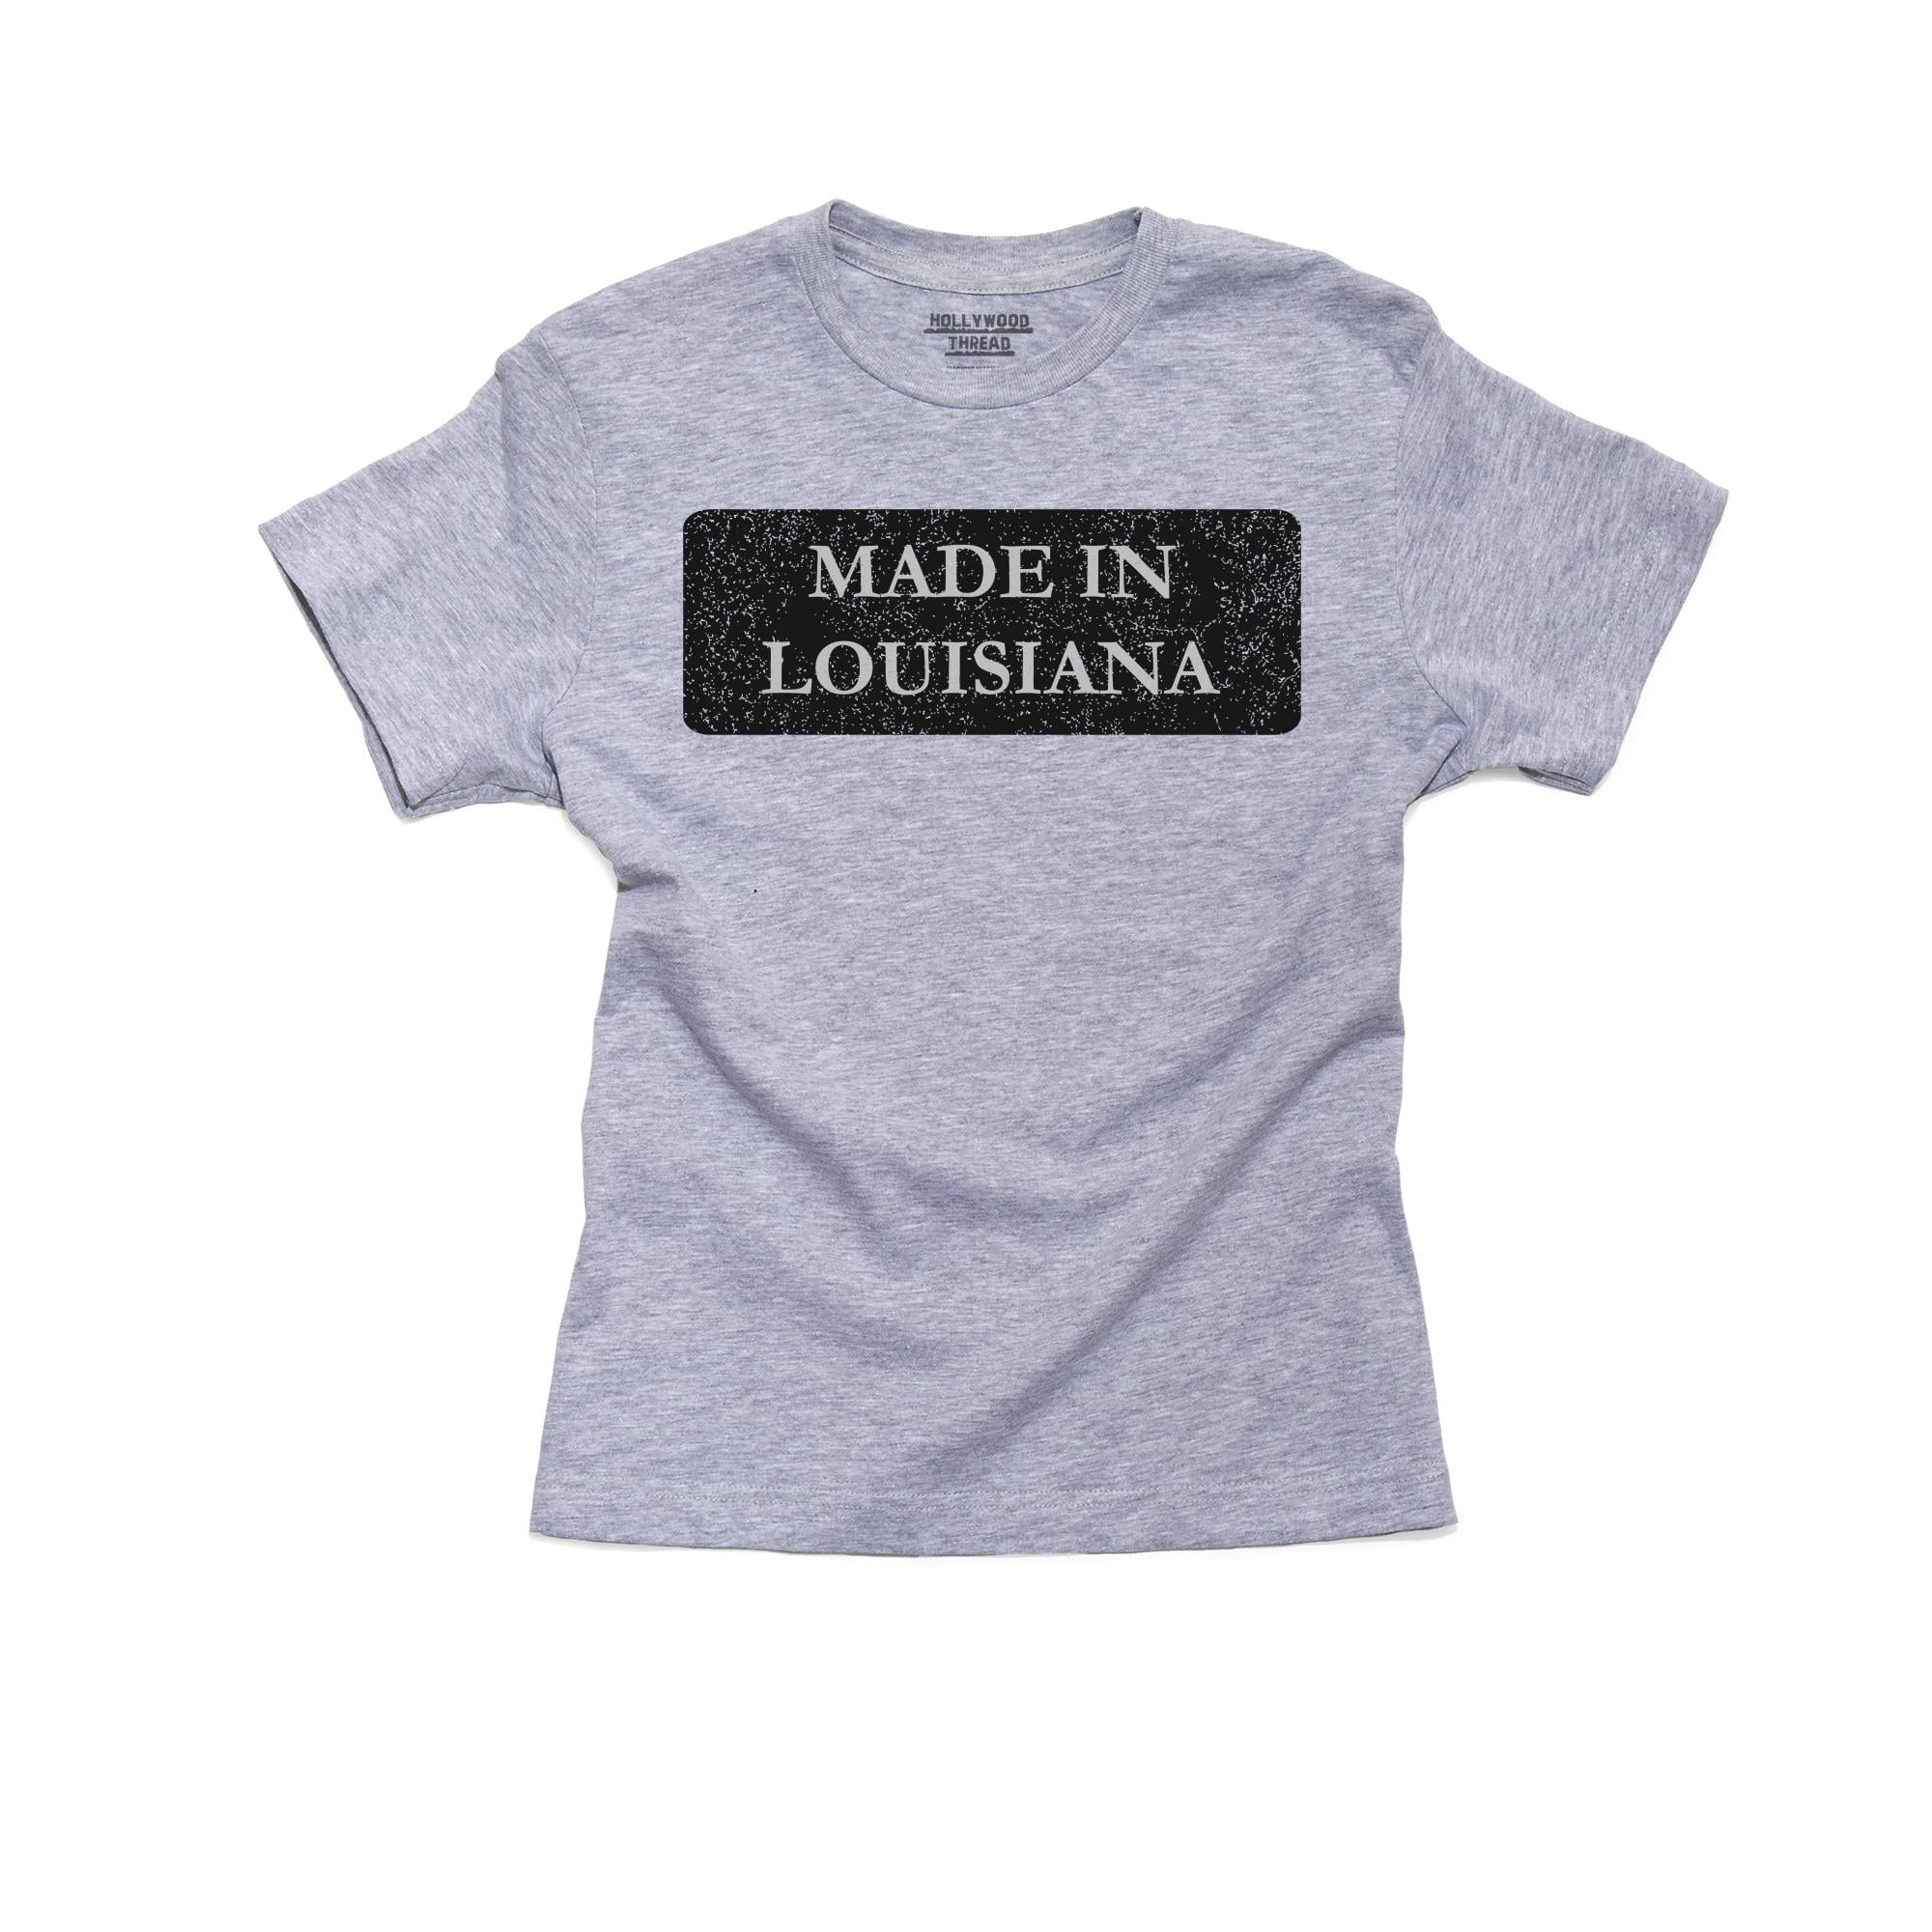 Unisex Made in Louisiana Shirt Made in Louisiana T-shirt 